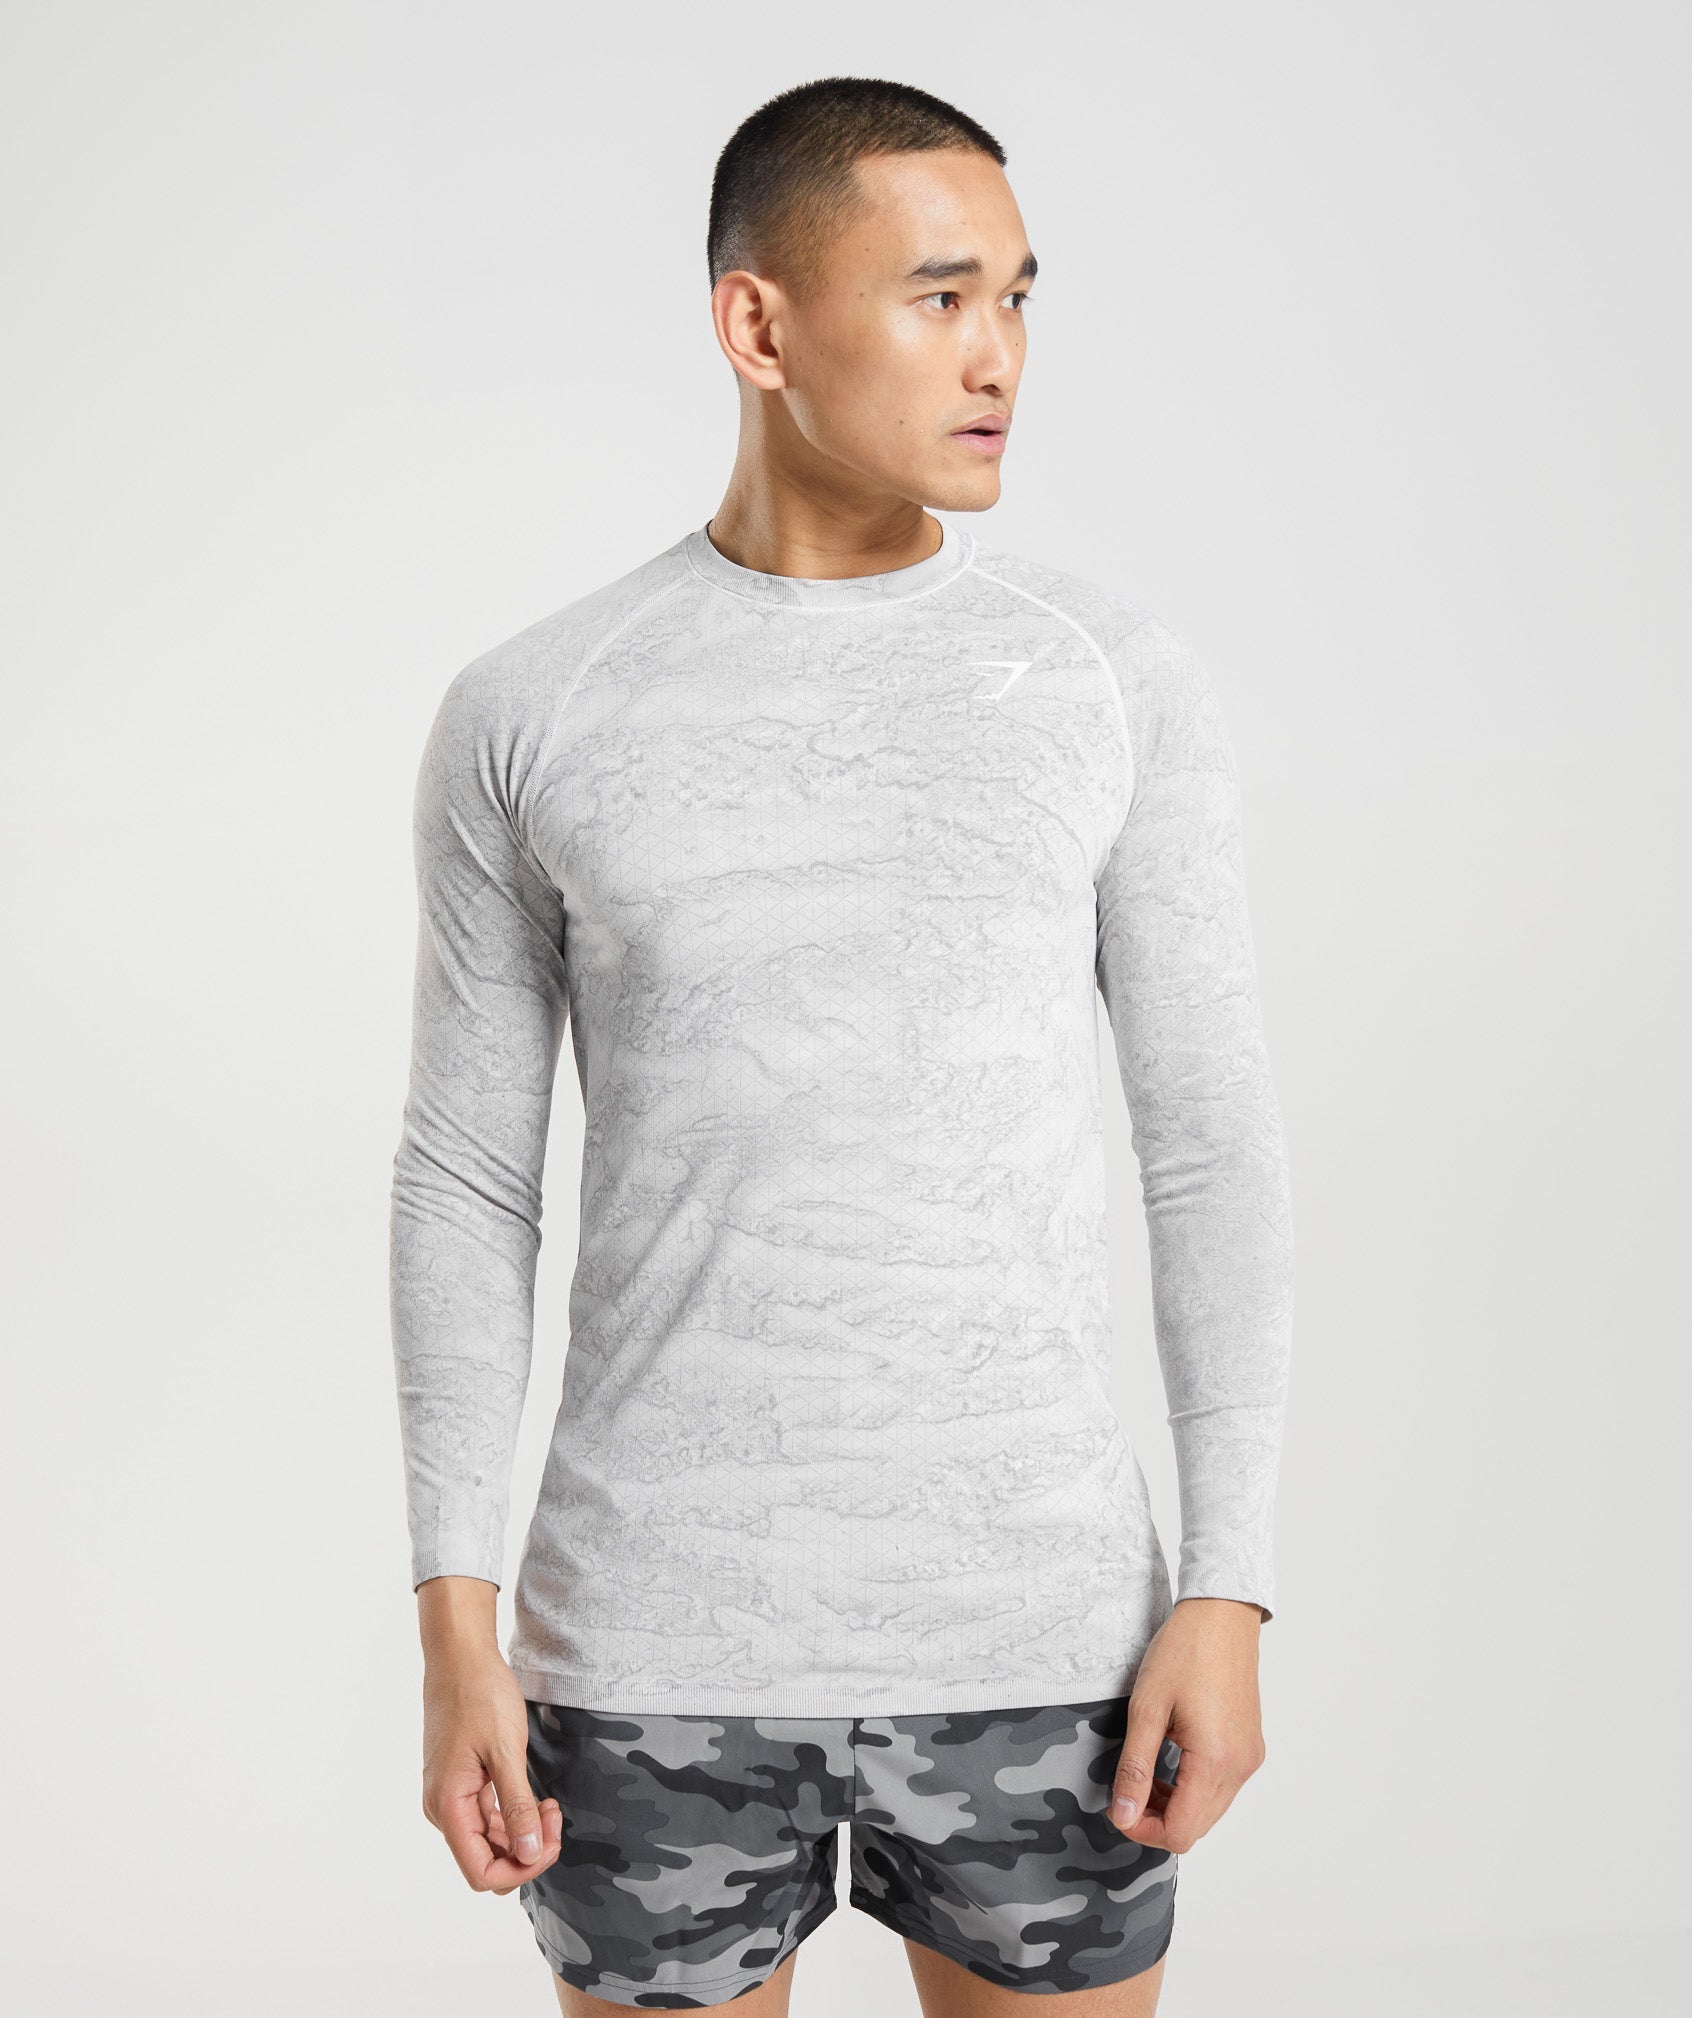 Geo Seamless Long Sleeve T-Shirt in Off White/Light Grey